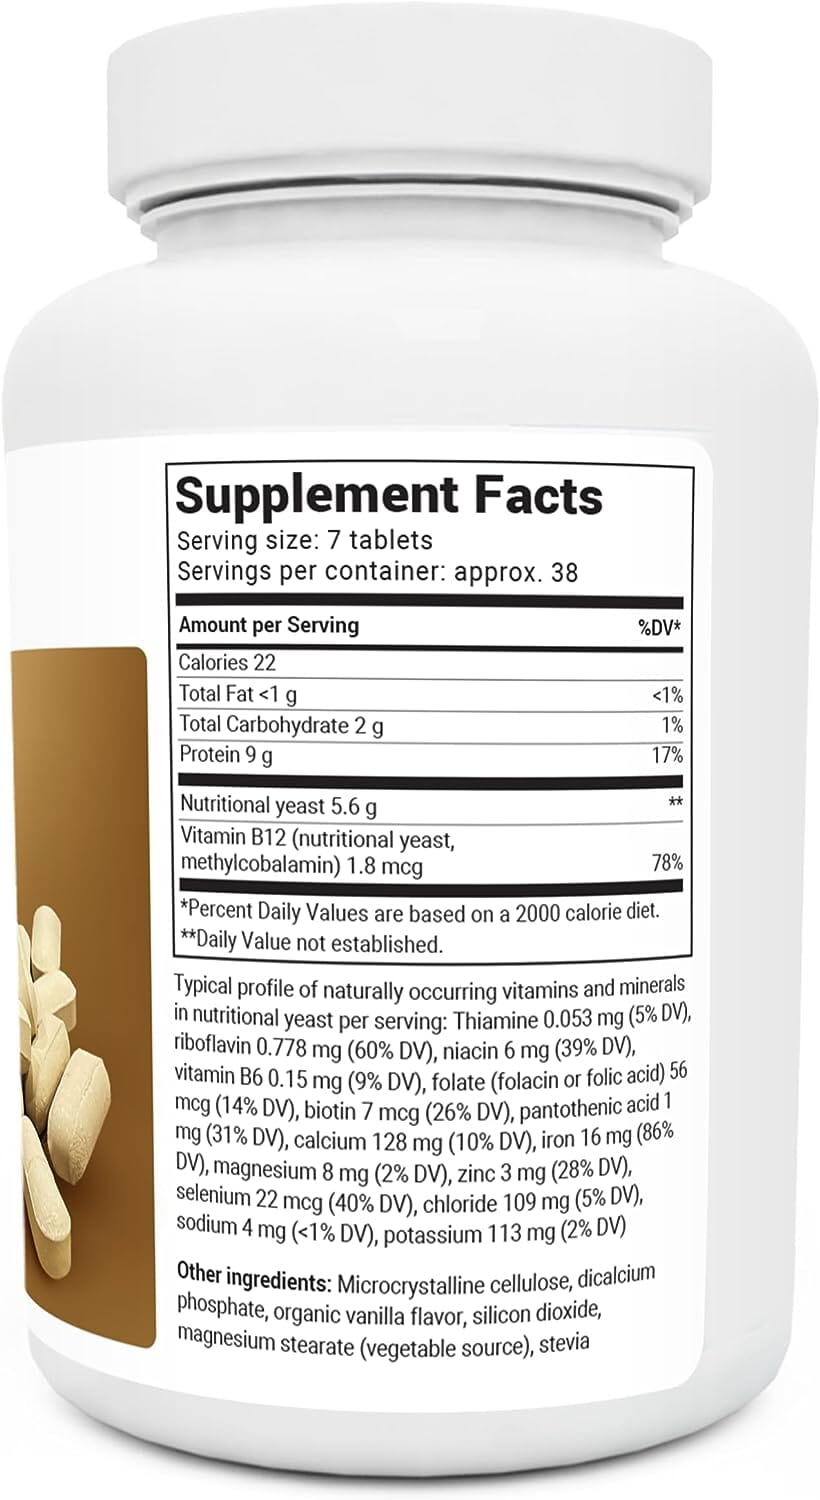 Dr. Berg Nutritional Yeast Tablets – Natural B12 Added - All 8 B Vitamin Complex – Organic Vanilla Flavor - 270 Vegan Tablets Dietary Supplements